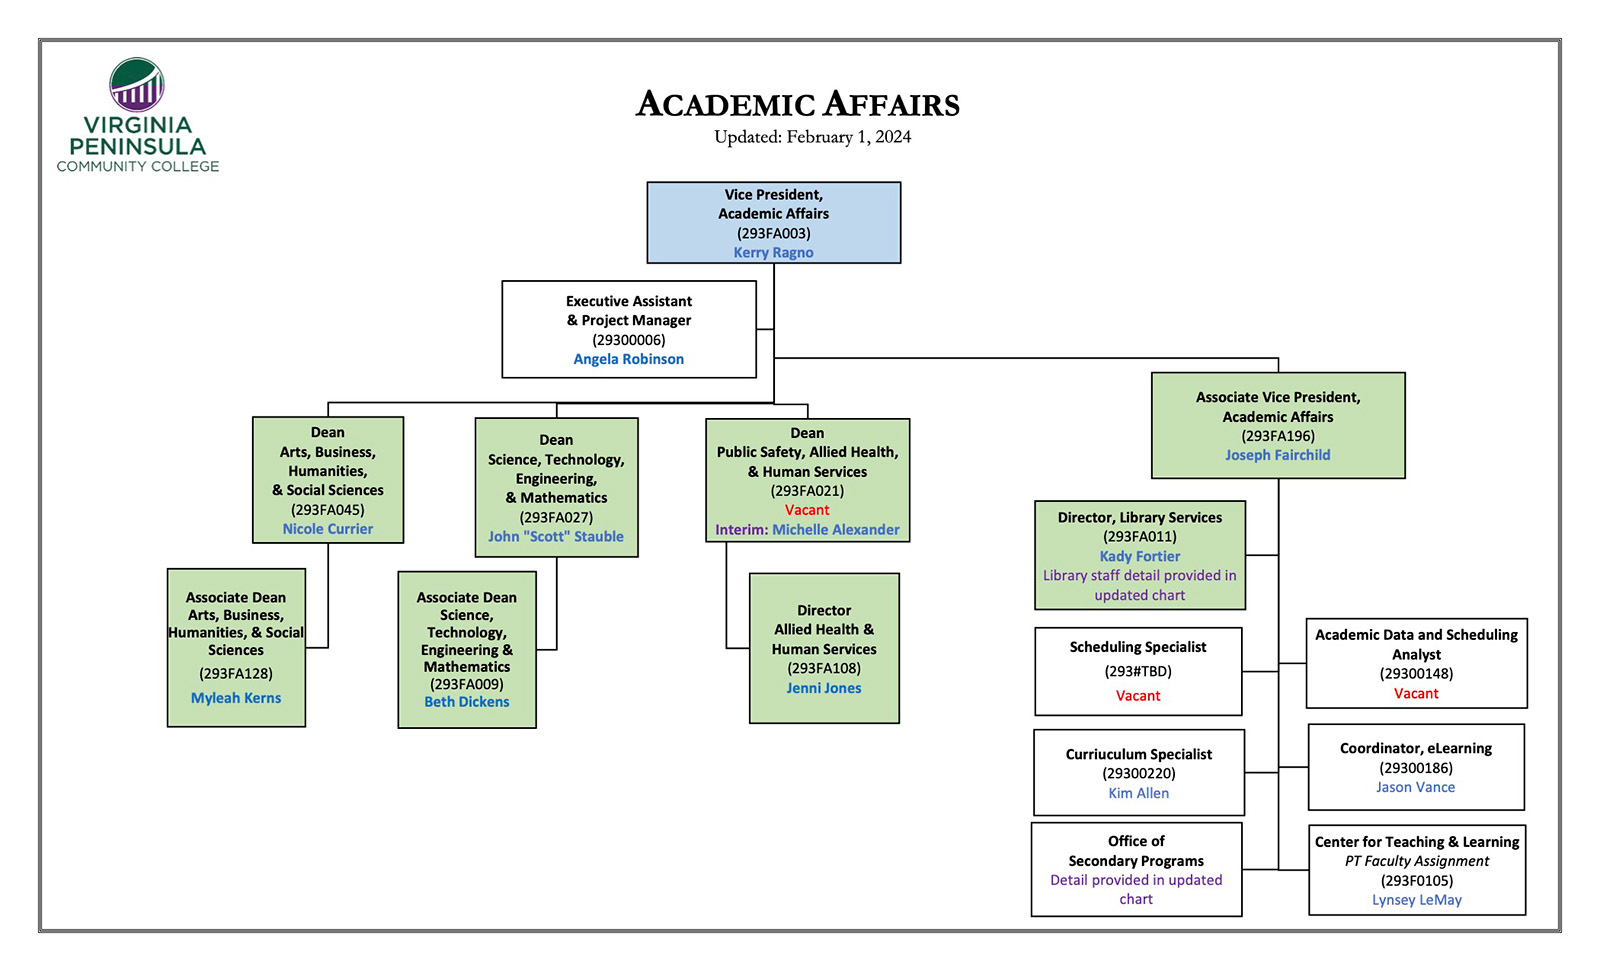 AcademicbAffairs org chart